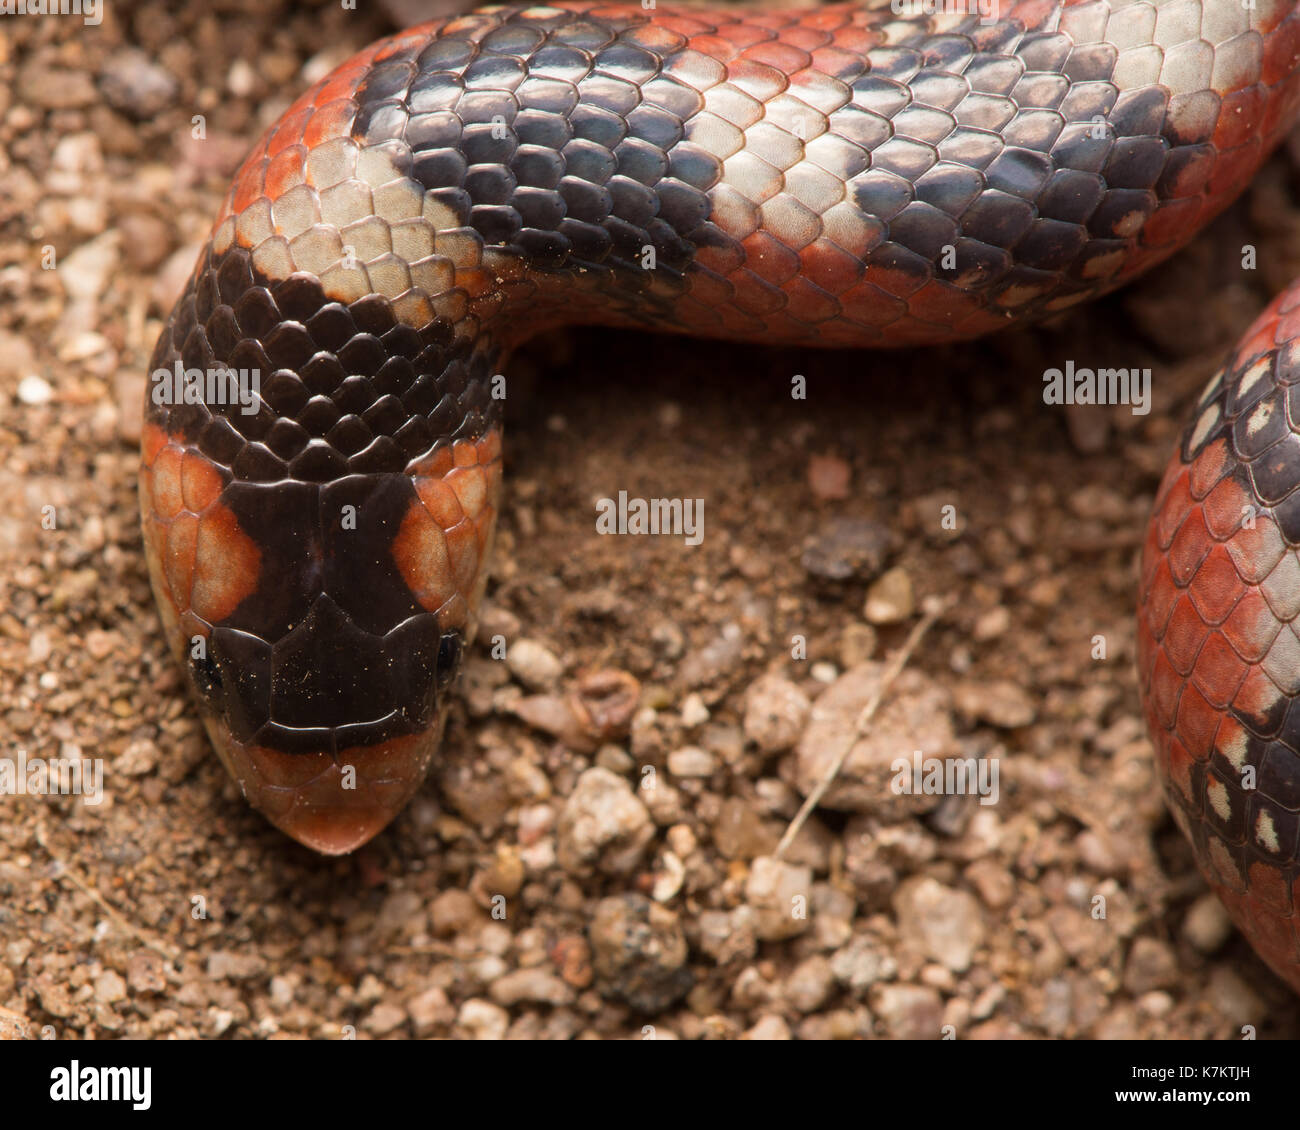 Thornscrub Hook-nosed Snake (Gyalopion quadrangulare) from Sonora, Mexico. Stock Photo